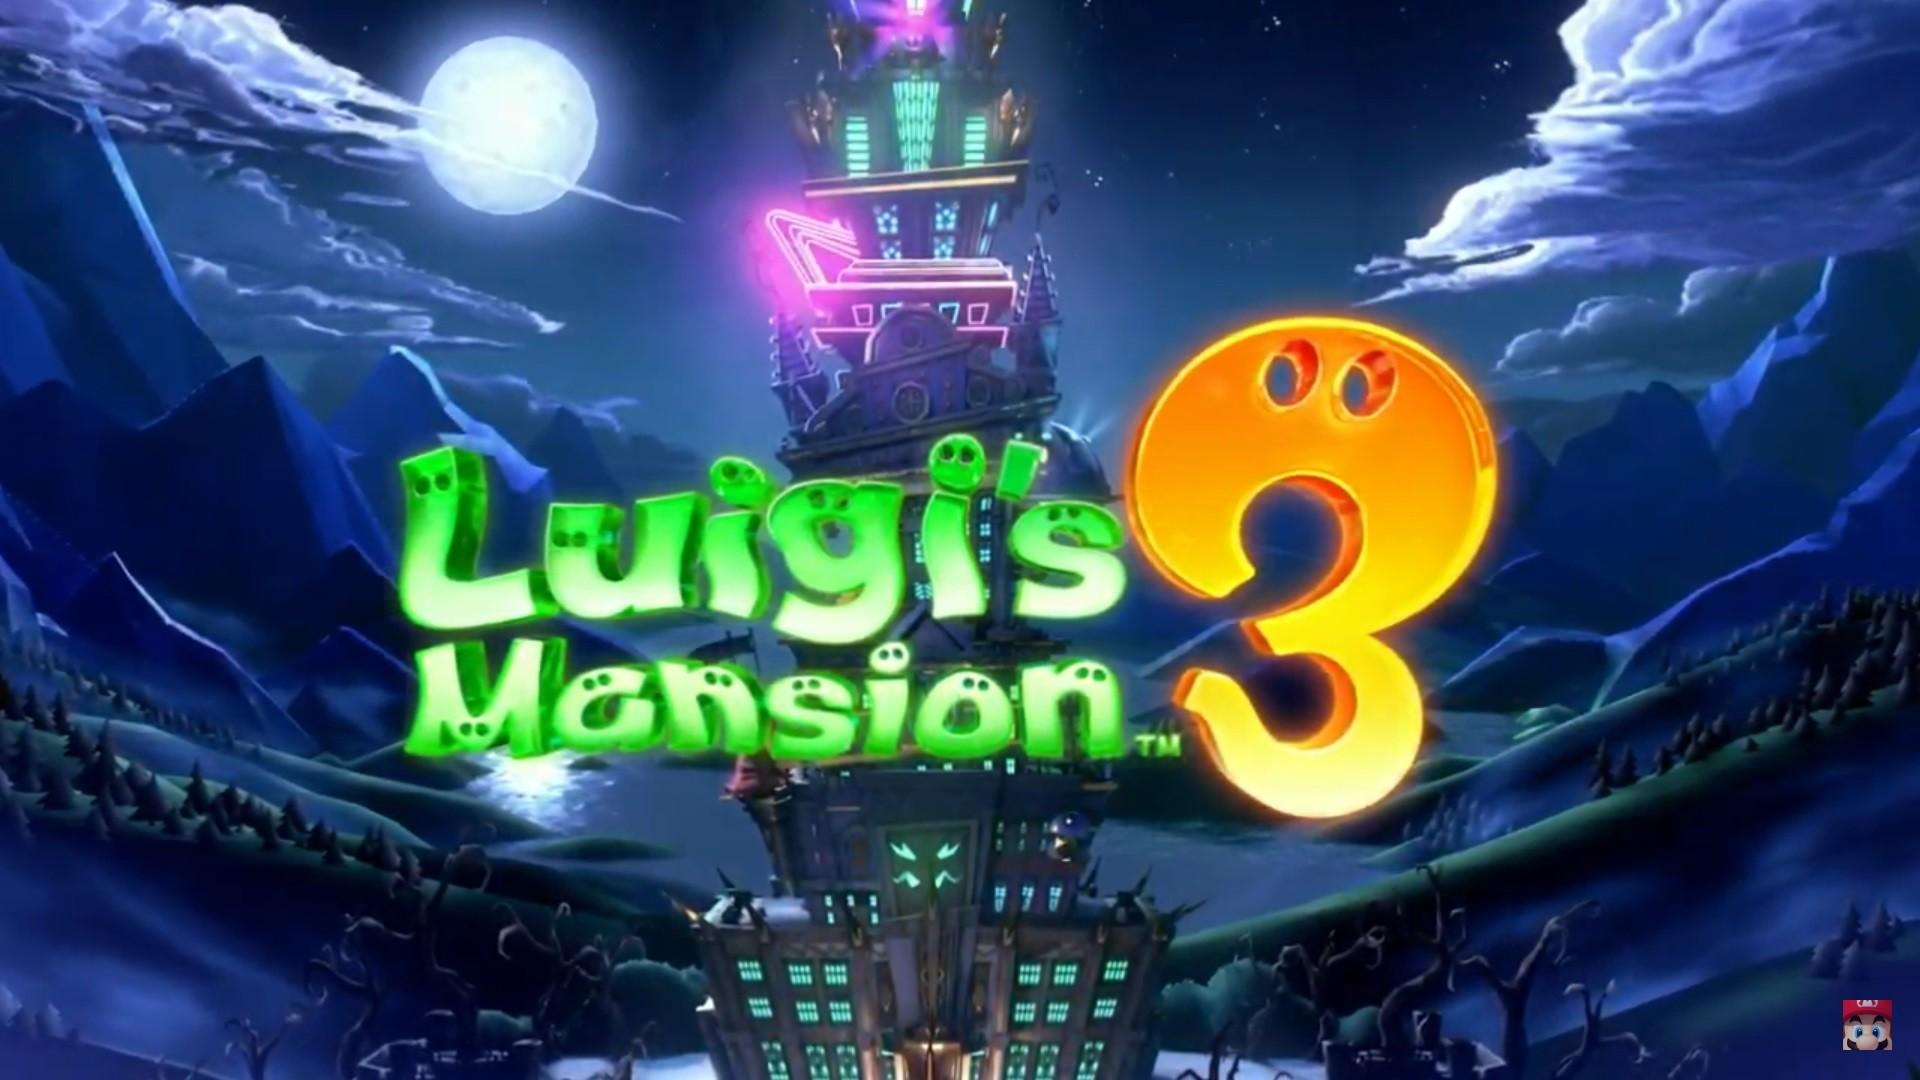 Nintendo shares more details about Luigi's Mansion 3